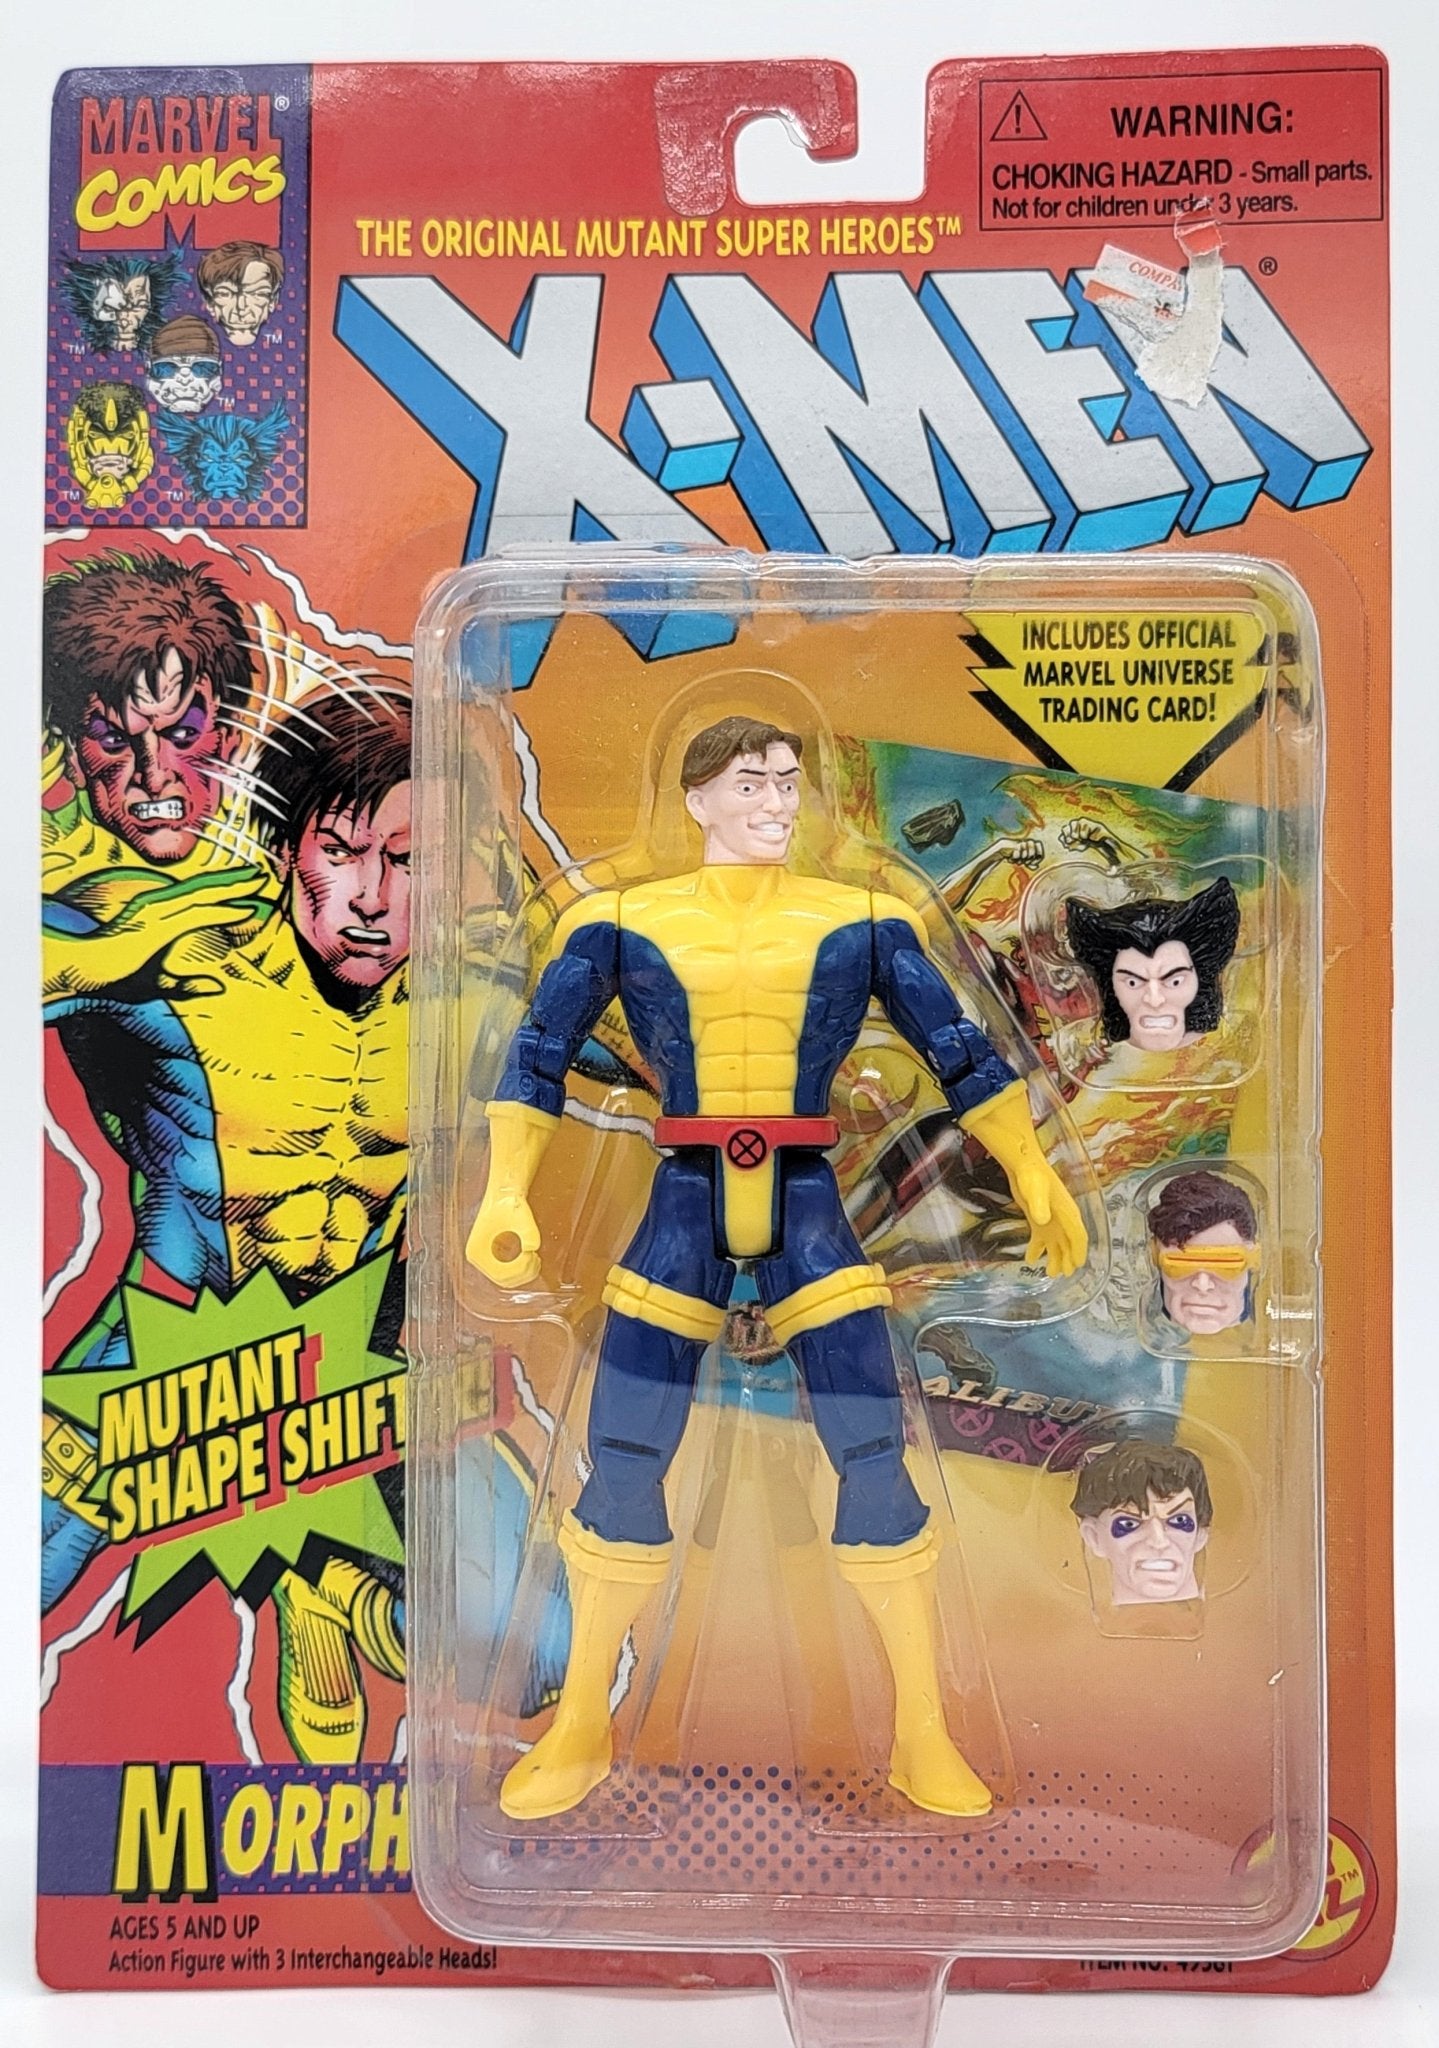 Toy Biz - Toy Biz | X-Men Morph 1996 with Trading Card | Vintage Marvel Action Figure - Action Figures - Steady Bunny Shop